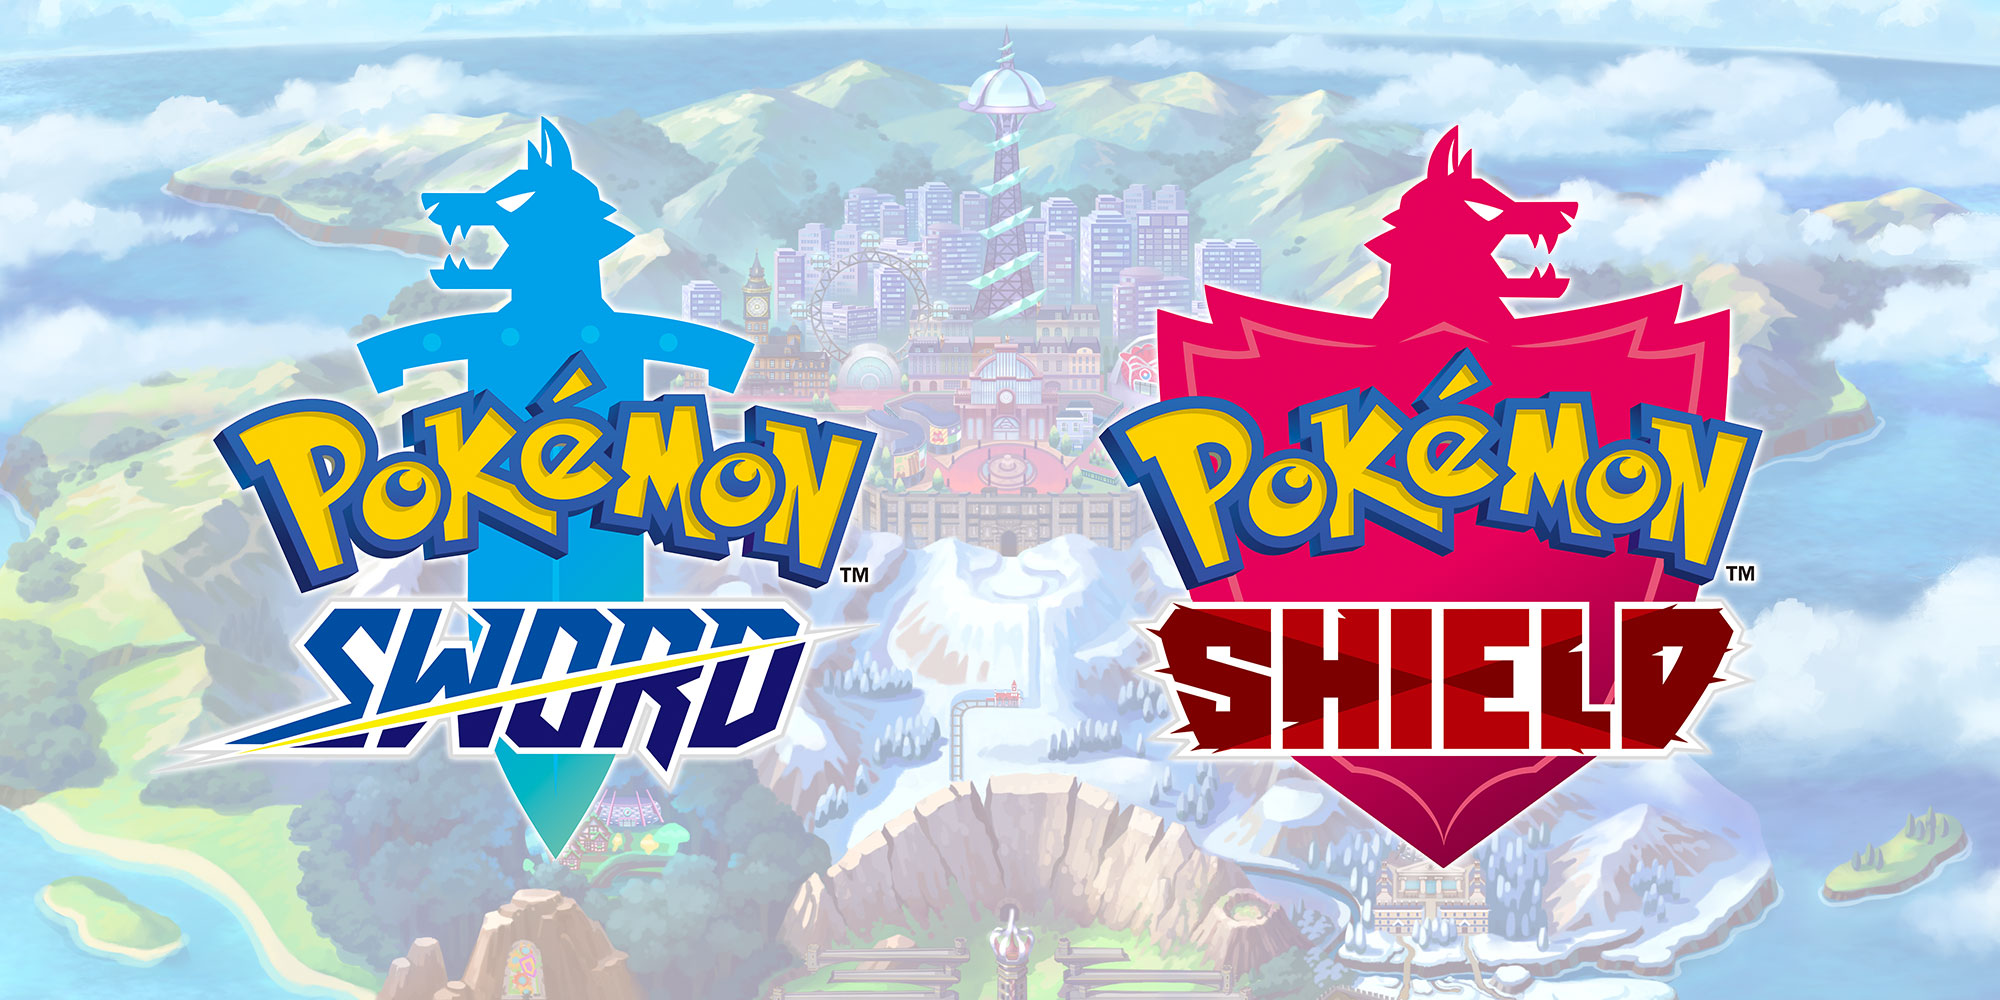 Pokémon Sword - Nintendo Switch - Mídia Digital - NeedGames